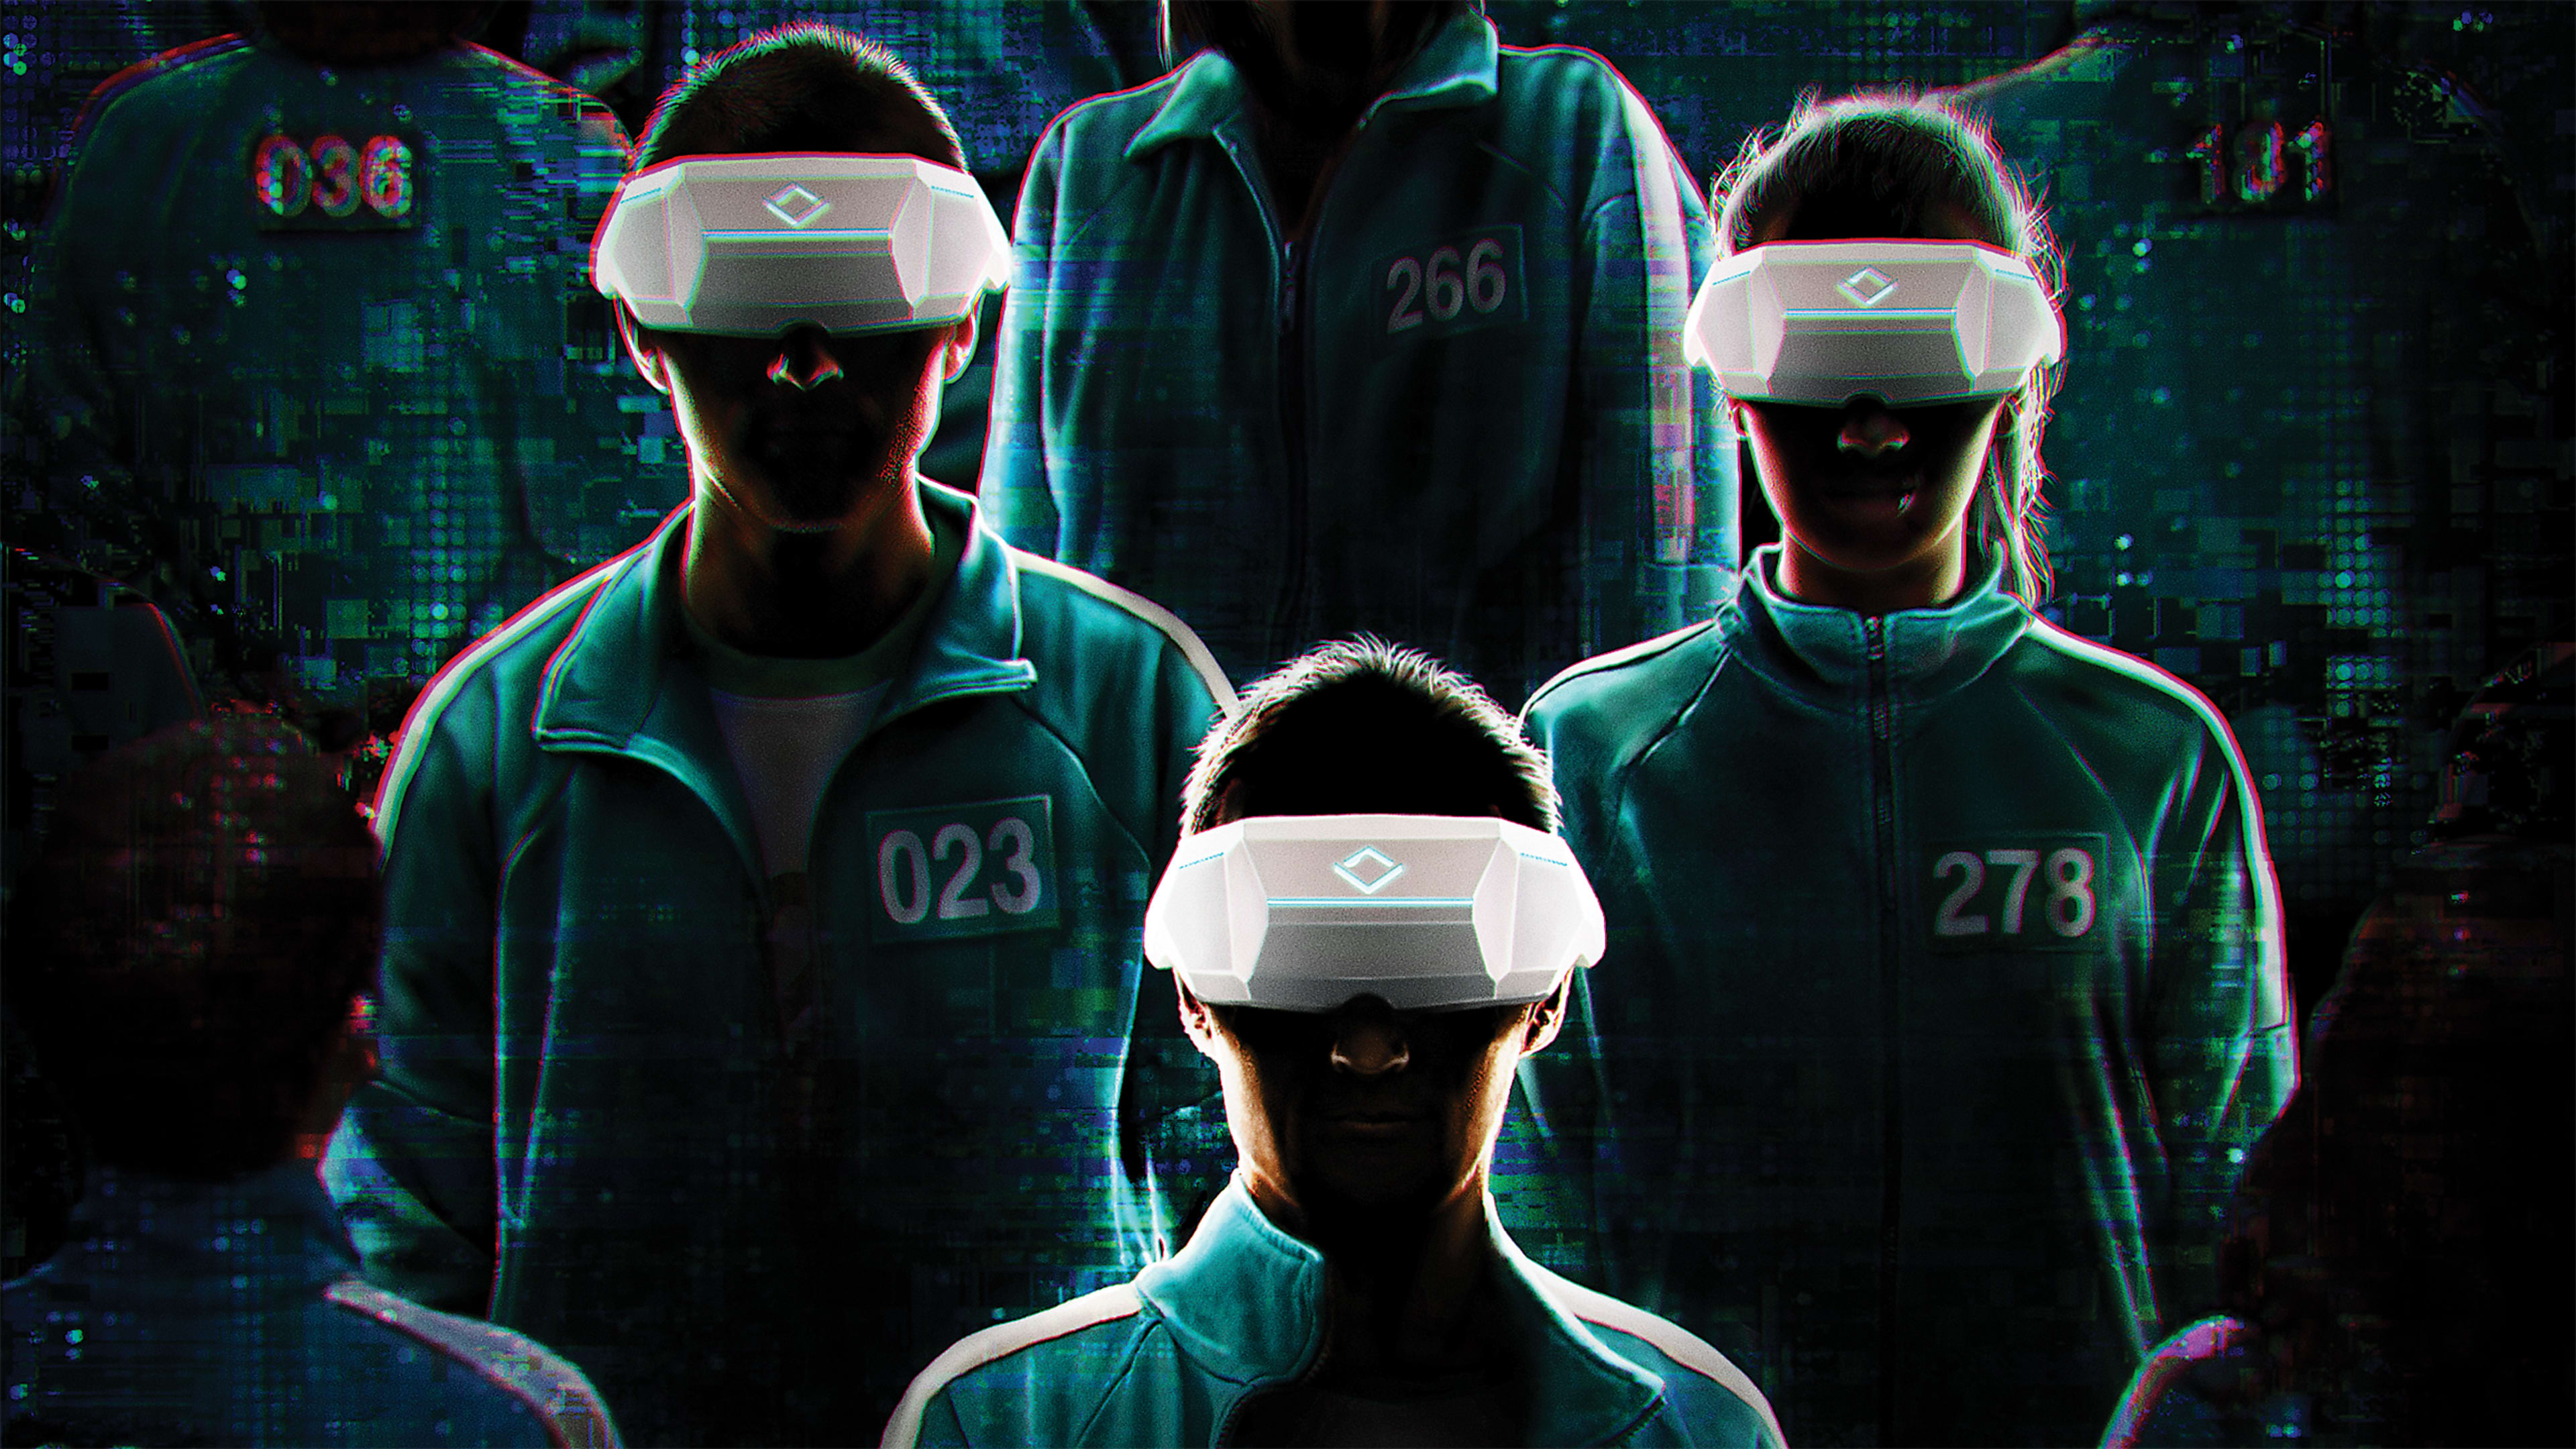 Sandbox VR plans an immersive virtual reality arcade ‘Squid Game’